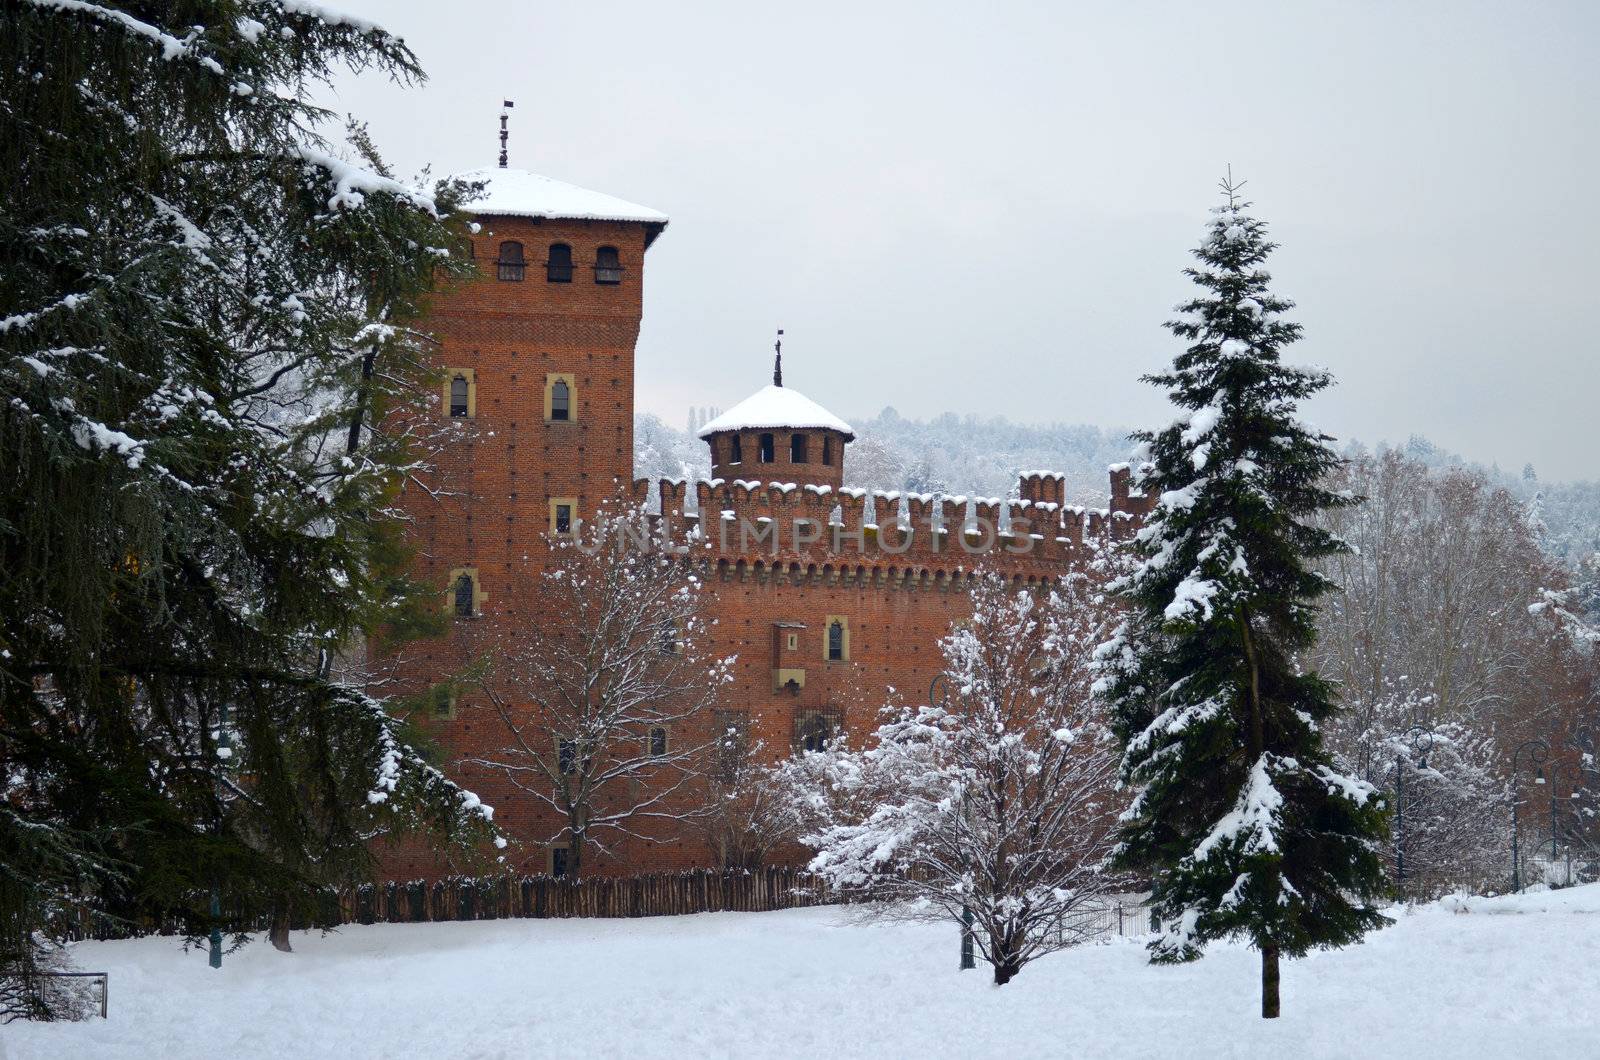 Turin, Italy: medieval castle in Parco del Valentino